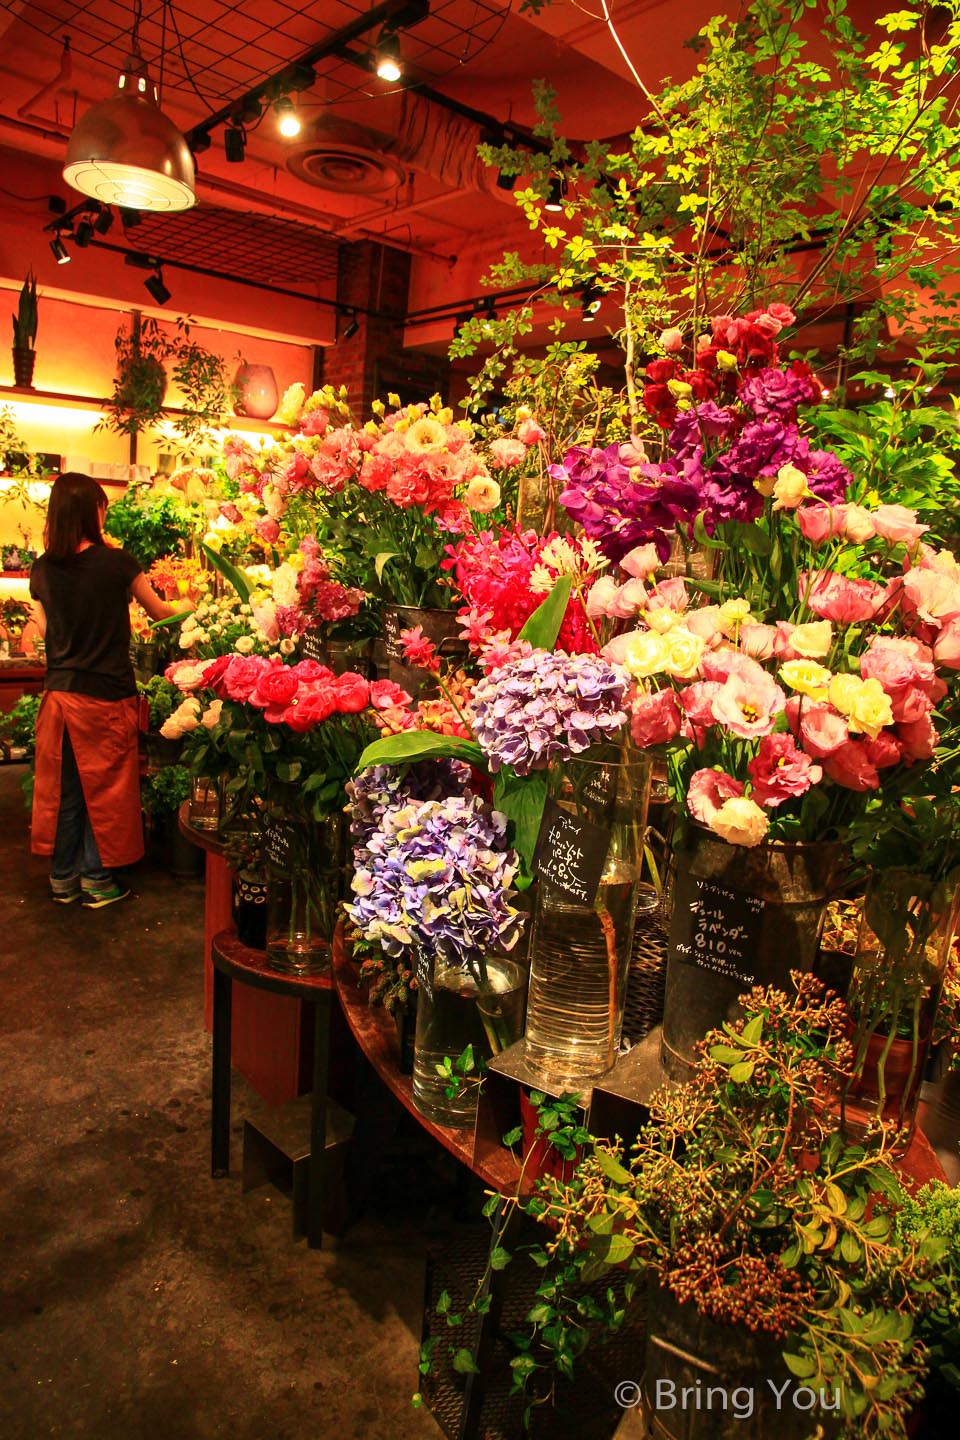 Aoyama Flower Market Tea House 南青山本店